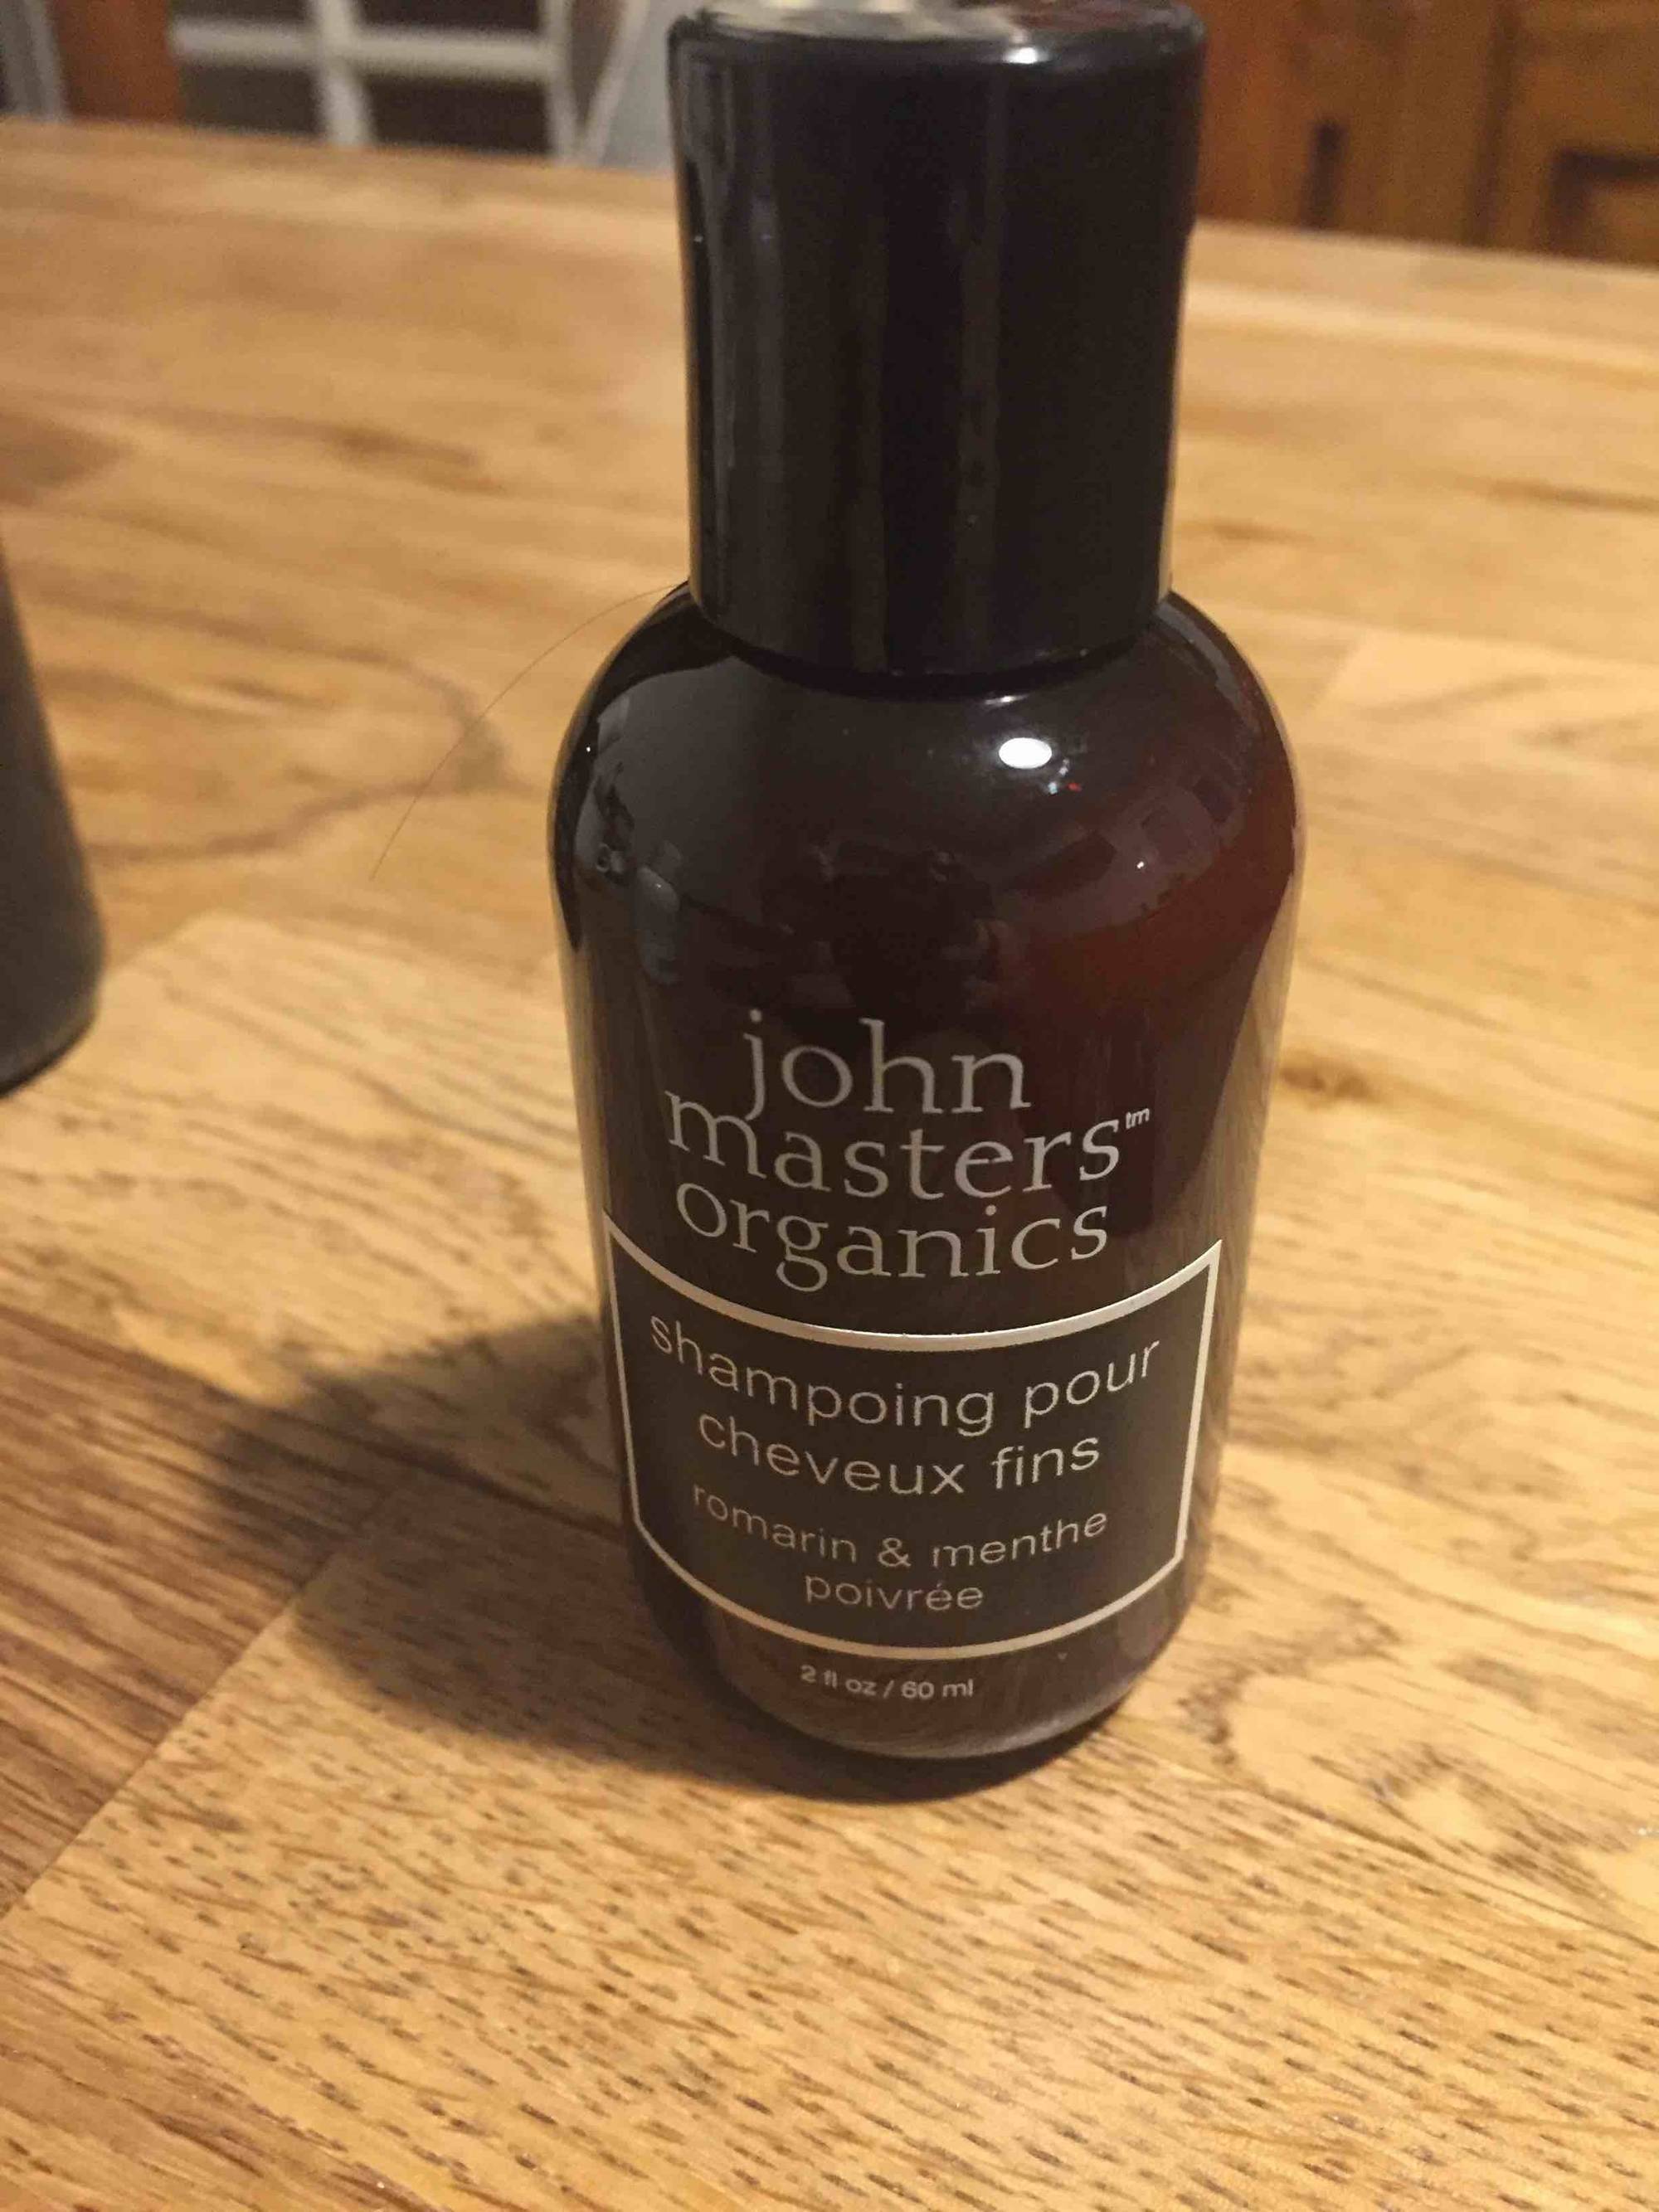 JOHN MASTERS ORGANICS - Shampooing pour cheveux fins